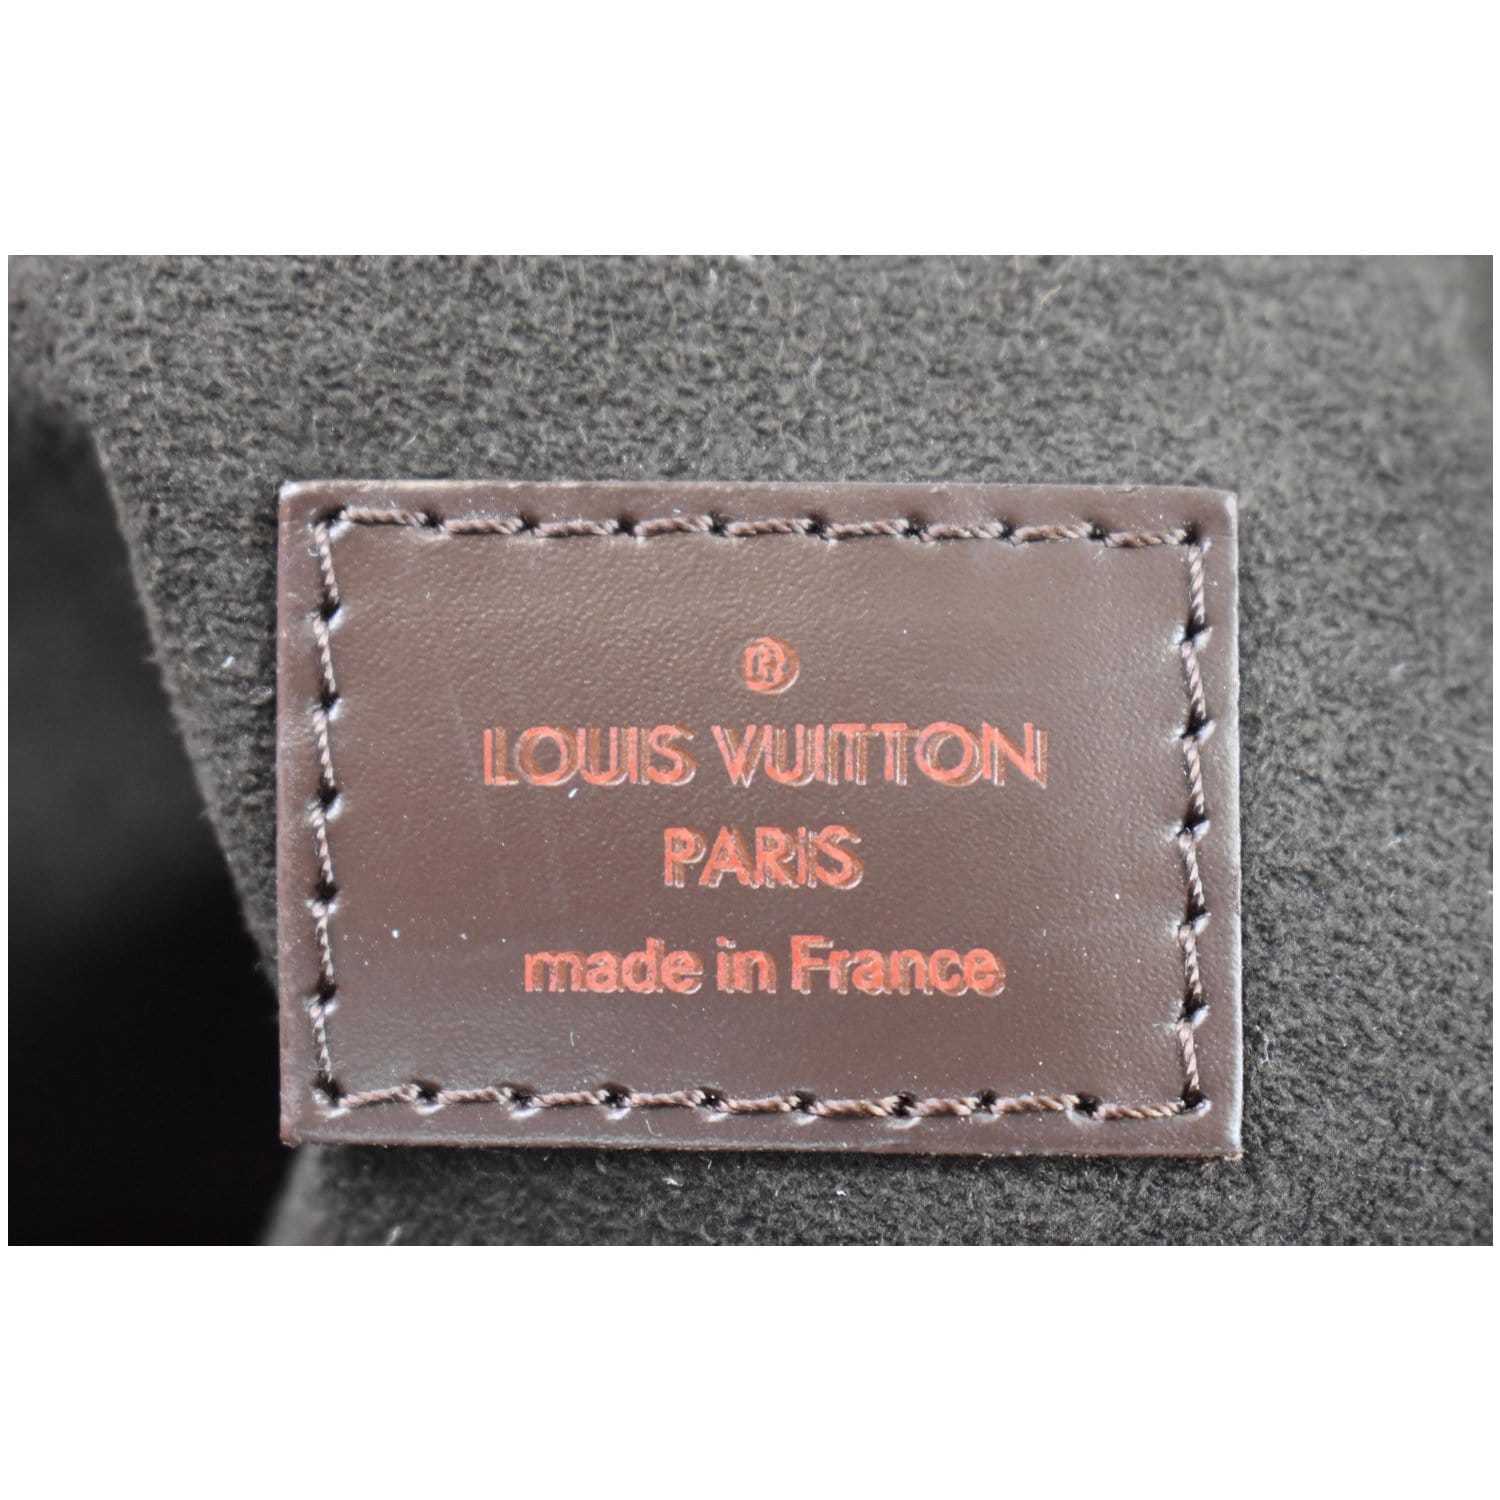 Authentic Louis Vuitton Portobello GM Damier Ebene Great Condition